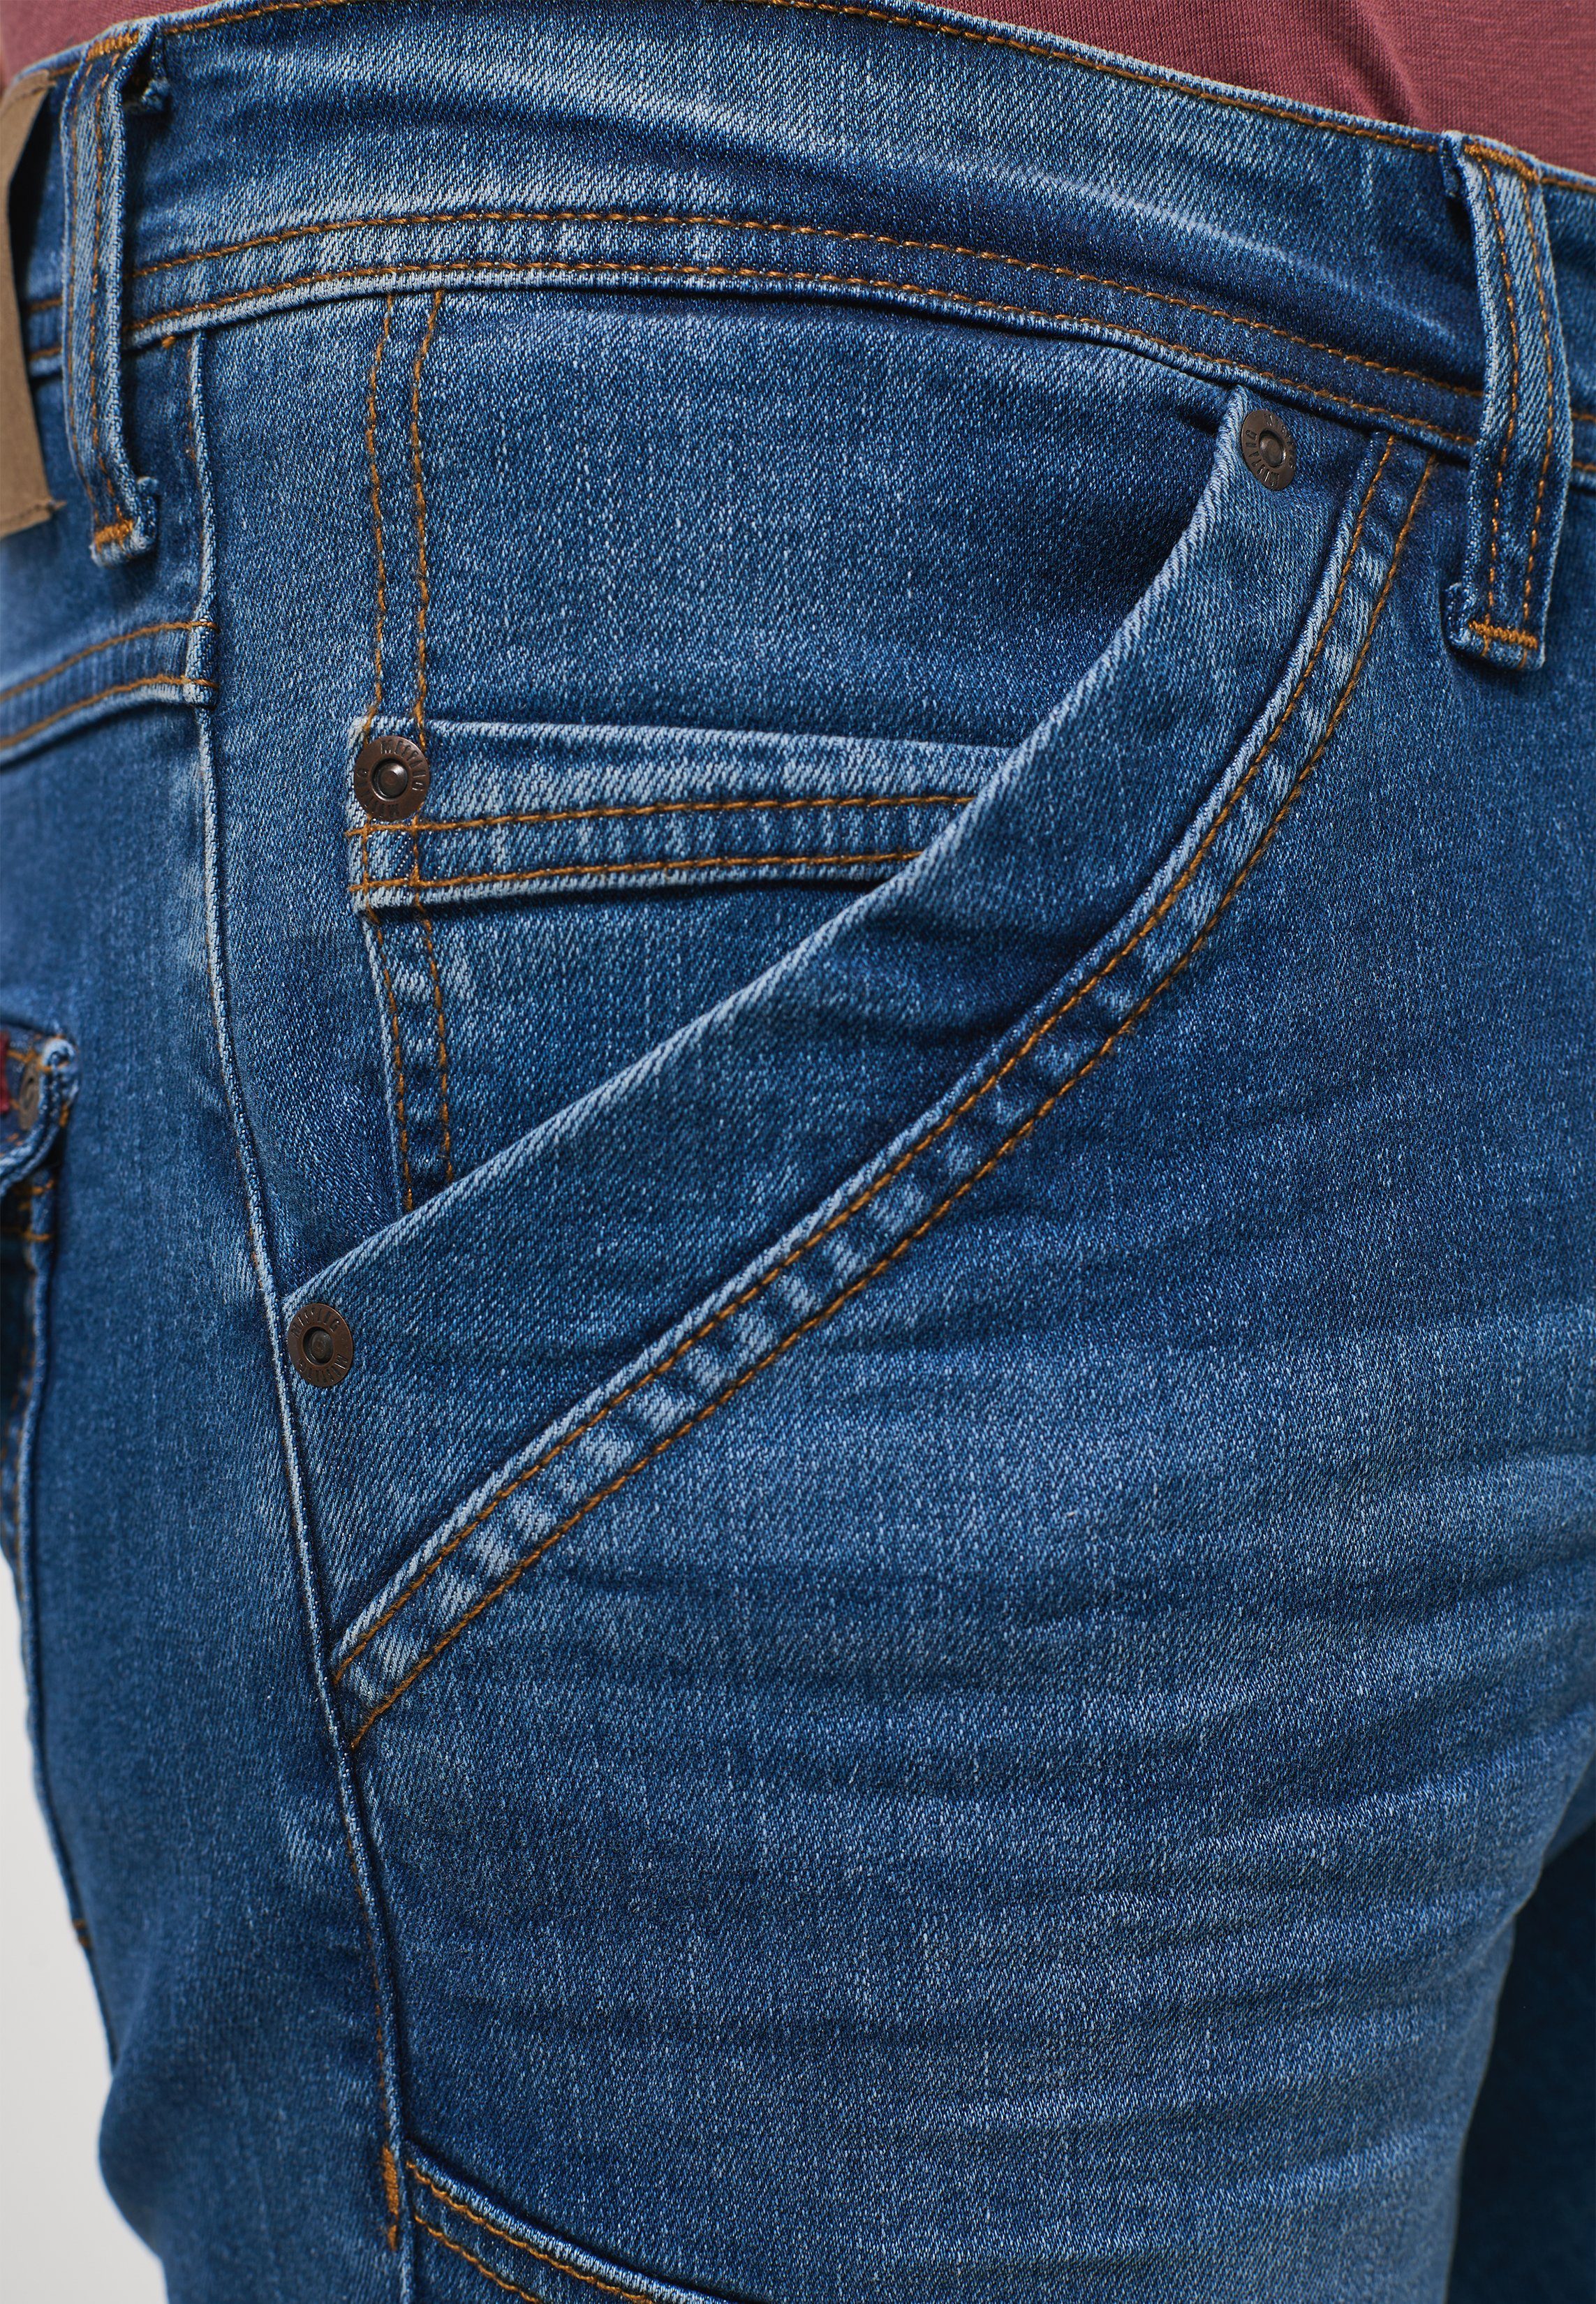 Shorts blau-5000783 MUSTANG Fremont Style Jeansshorts